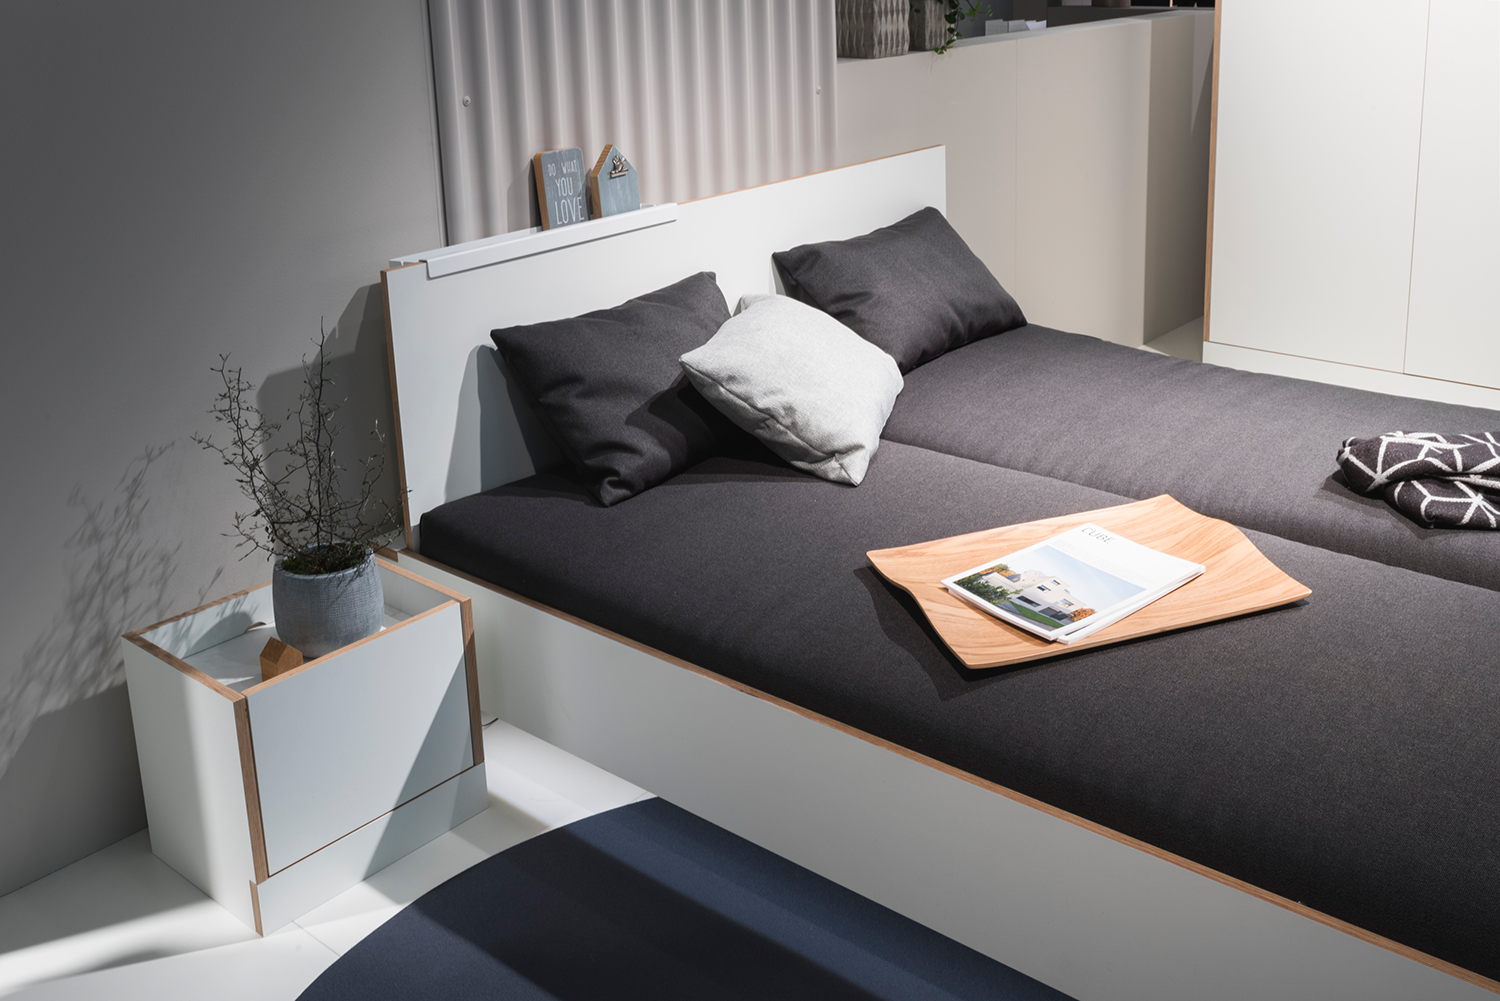 FLAI Doppelbett Komforthöhe + Kopfteil - KAQTU Design